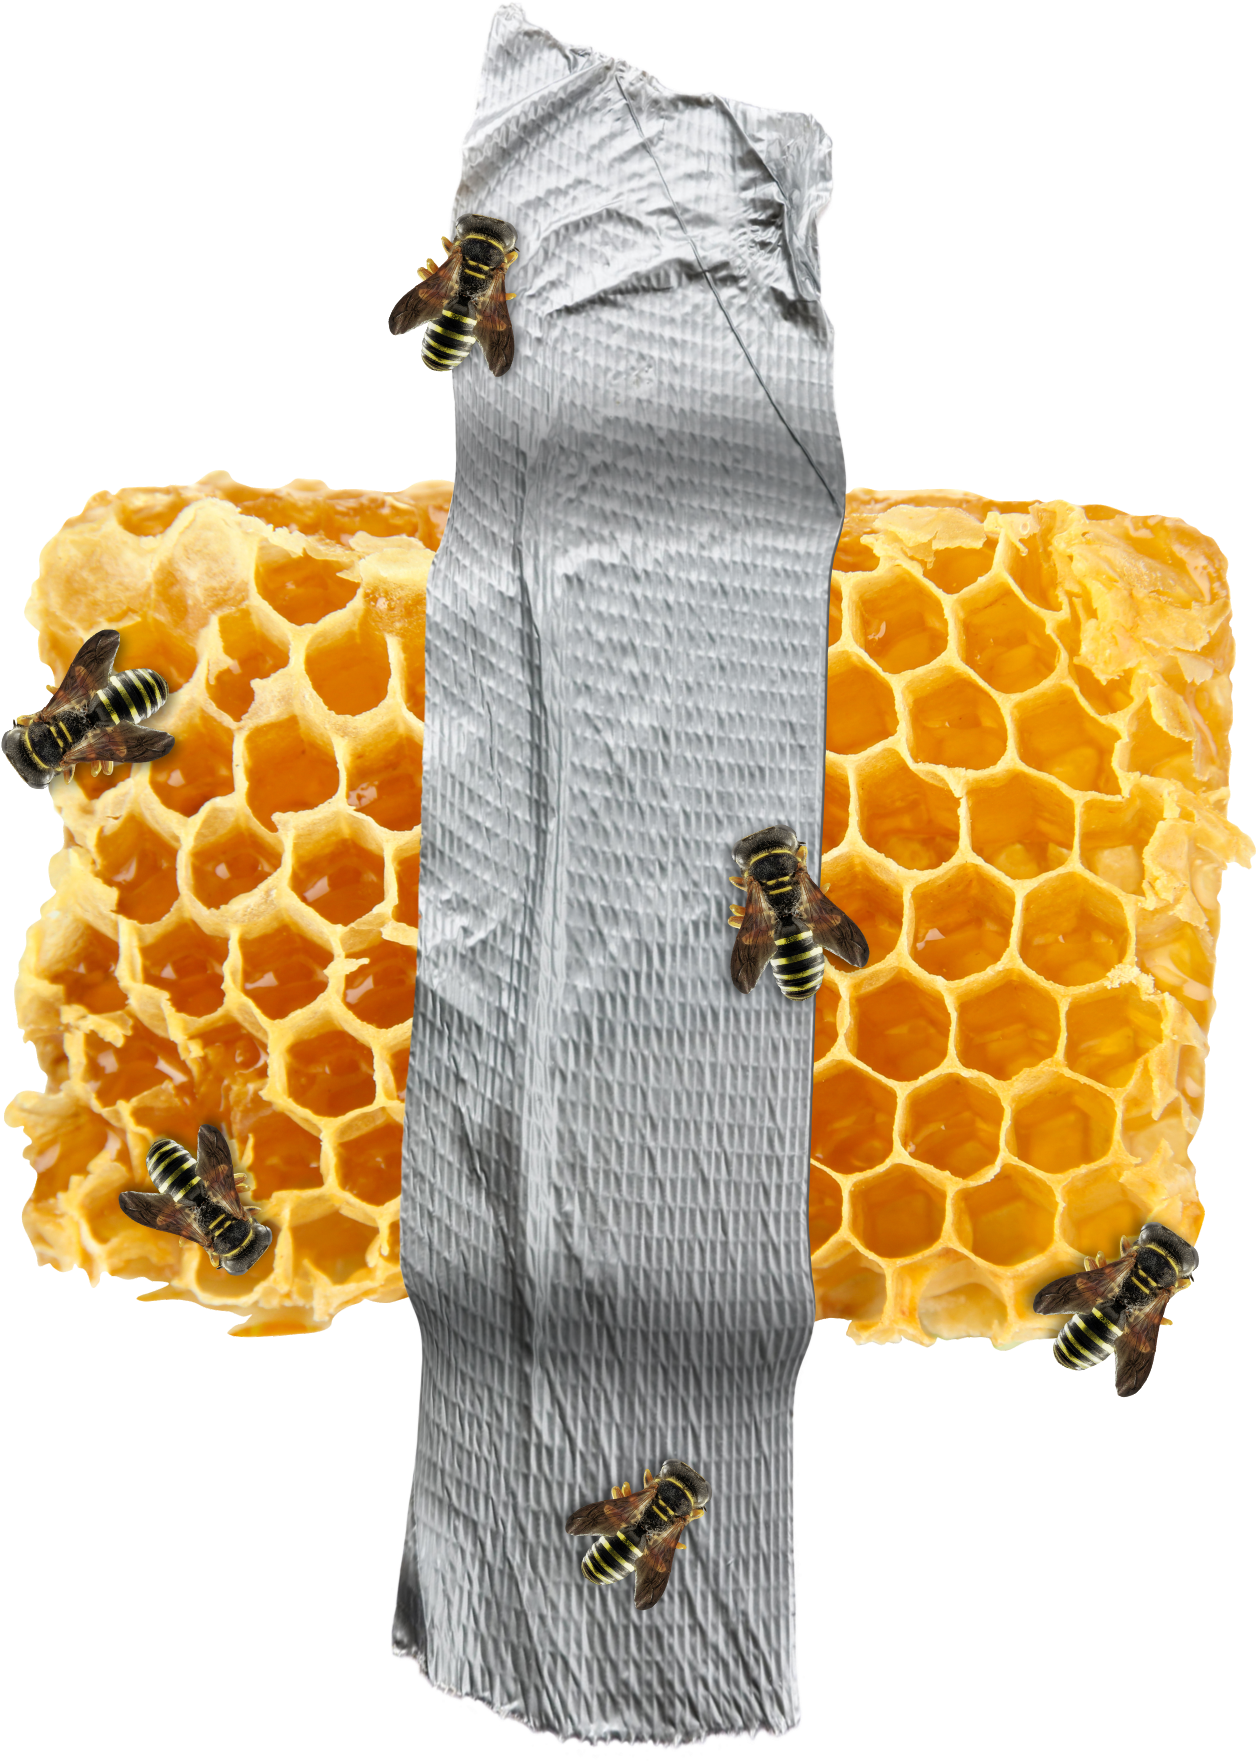 Organic Honeycomb Free Photo PNG Image